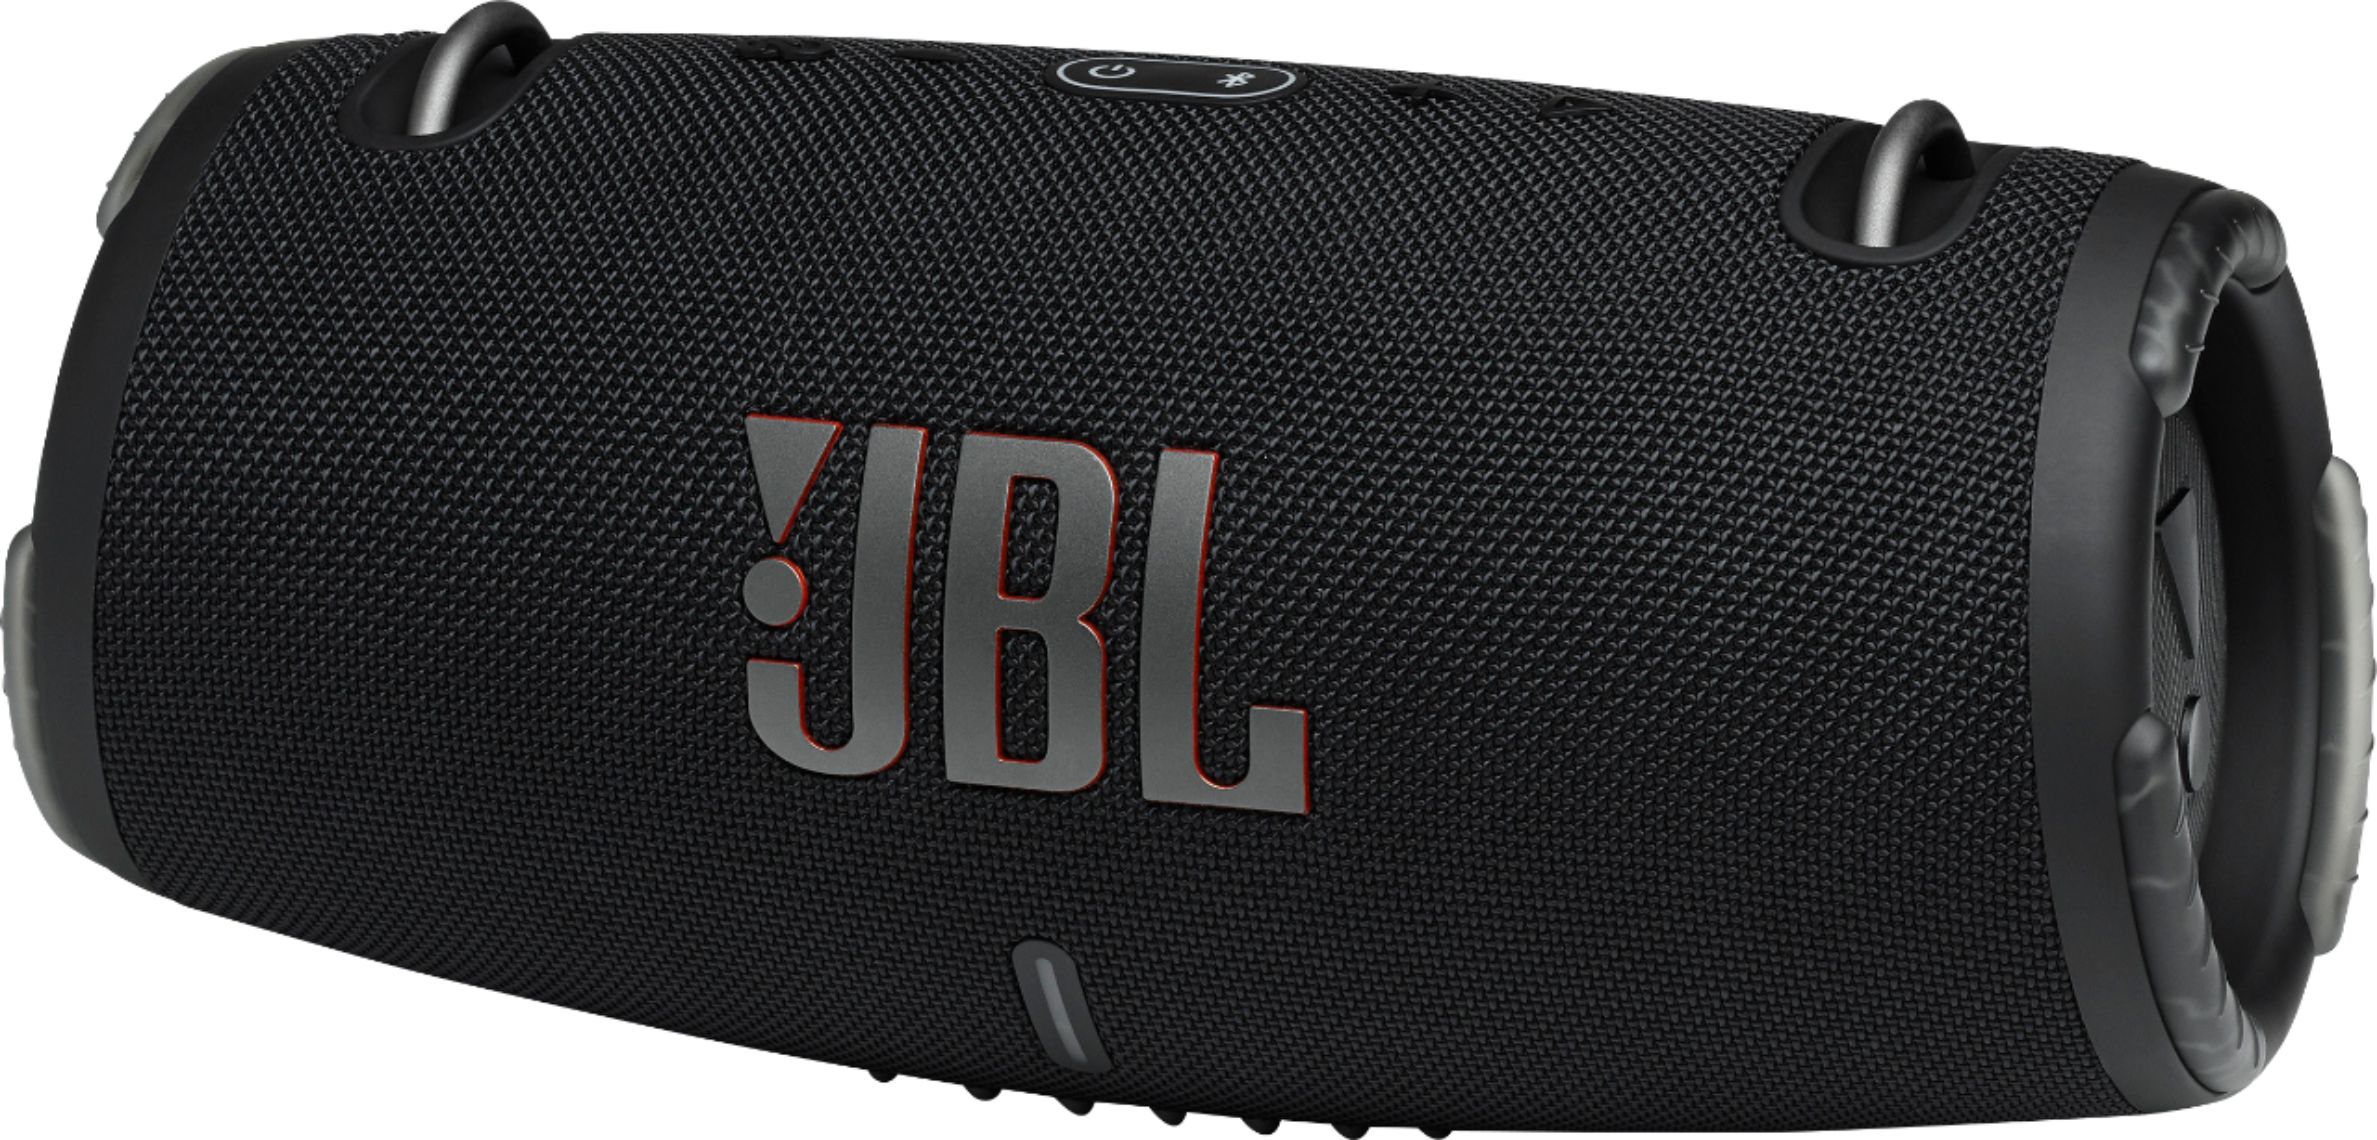 Jbl Xtreme 3 Black Bluetooth Speaker Best Buy